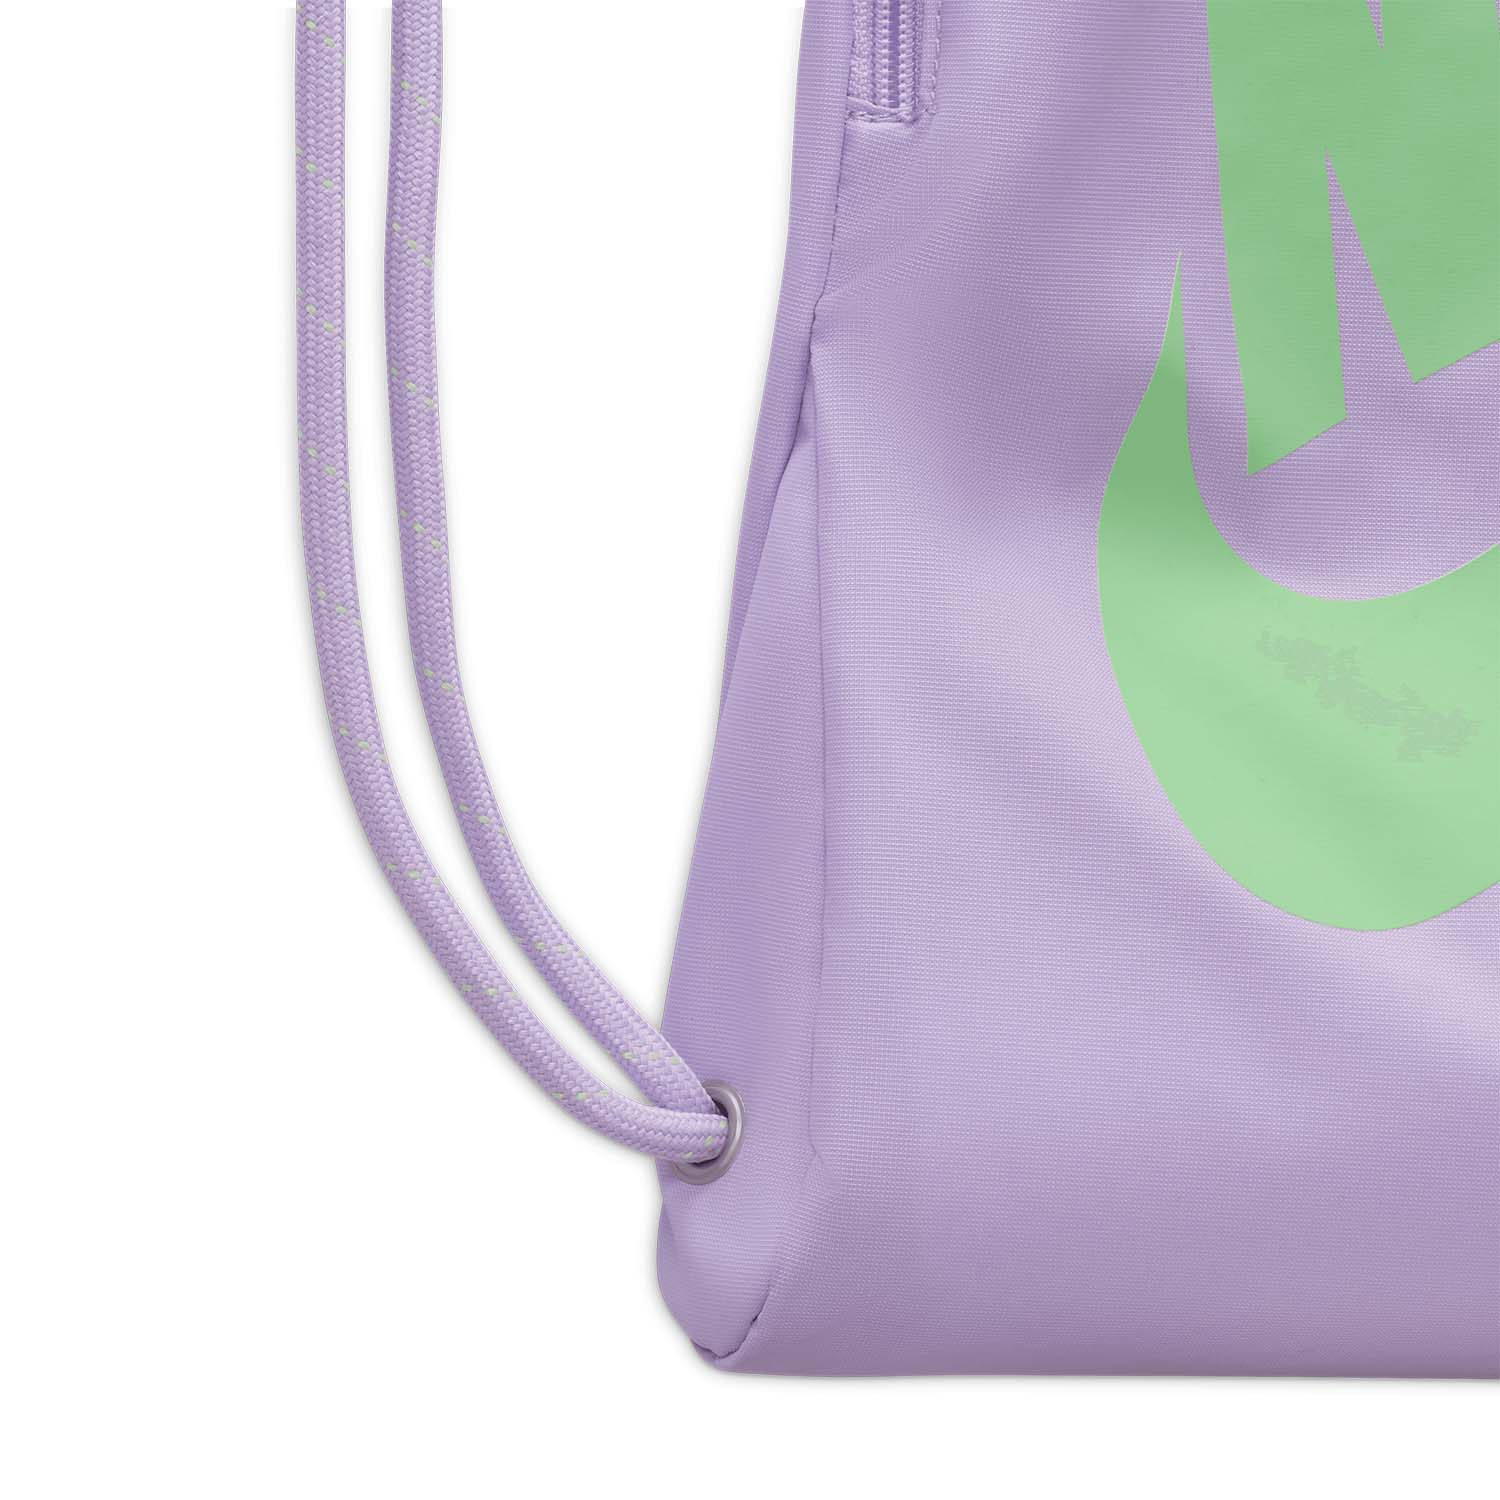 Nike Heritage Bolsa - Lilac Bloom/Vapor Green